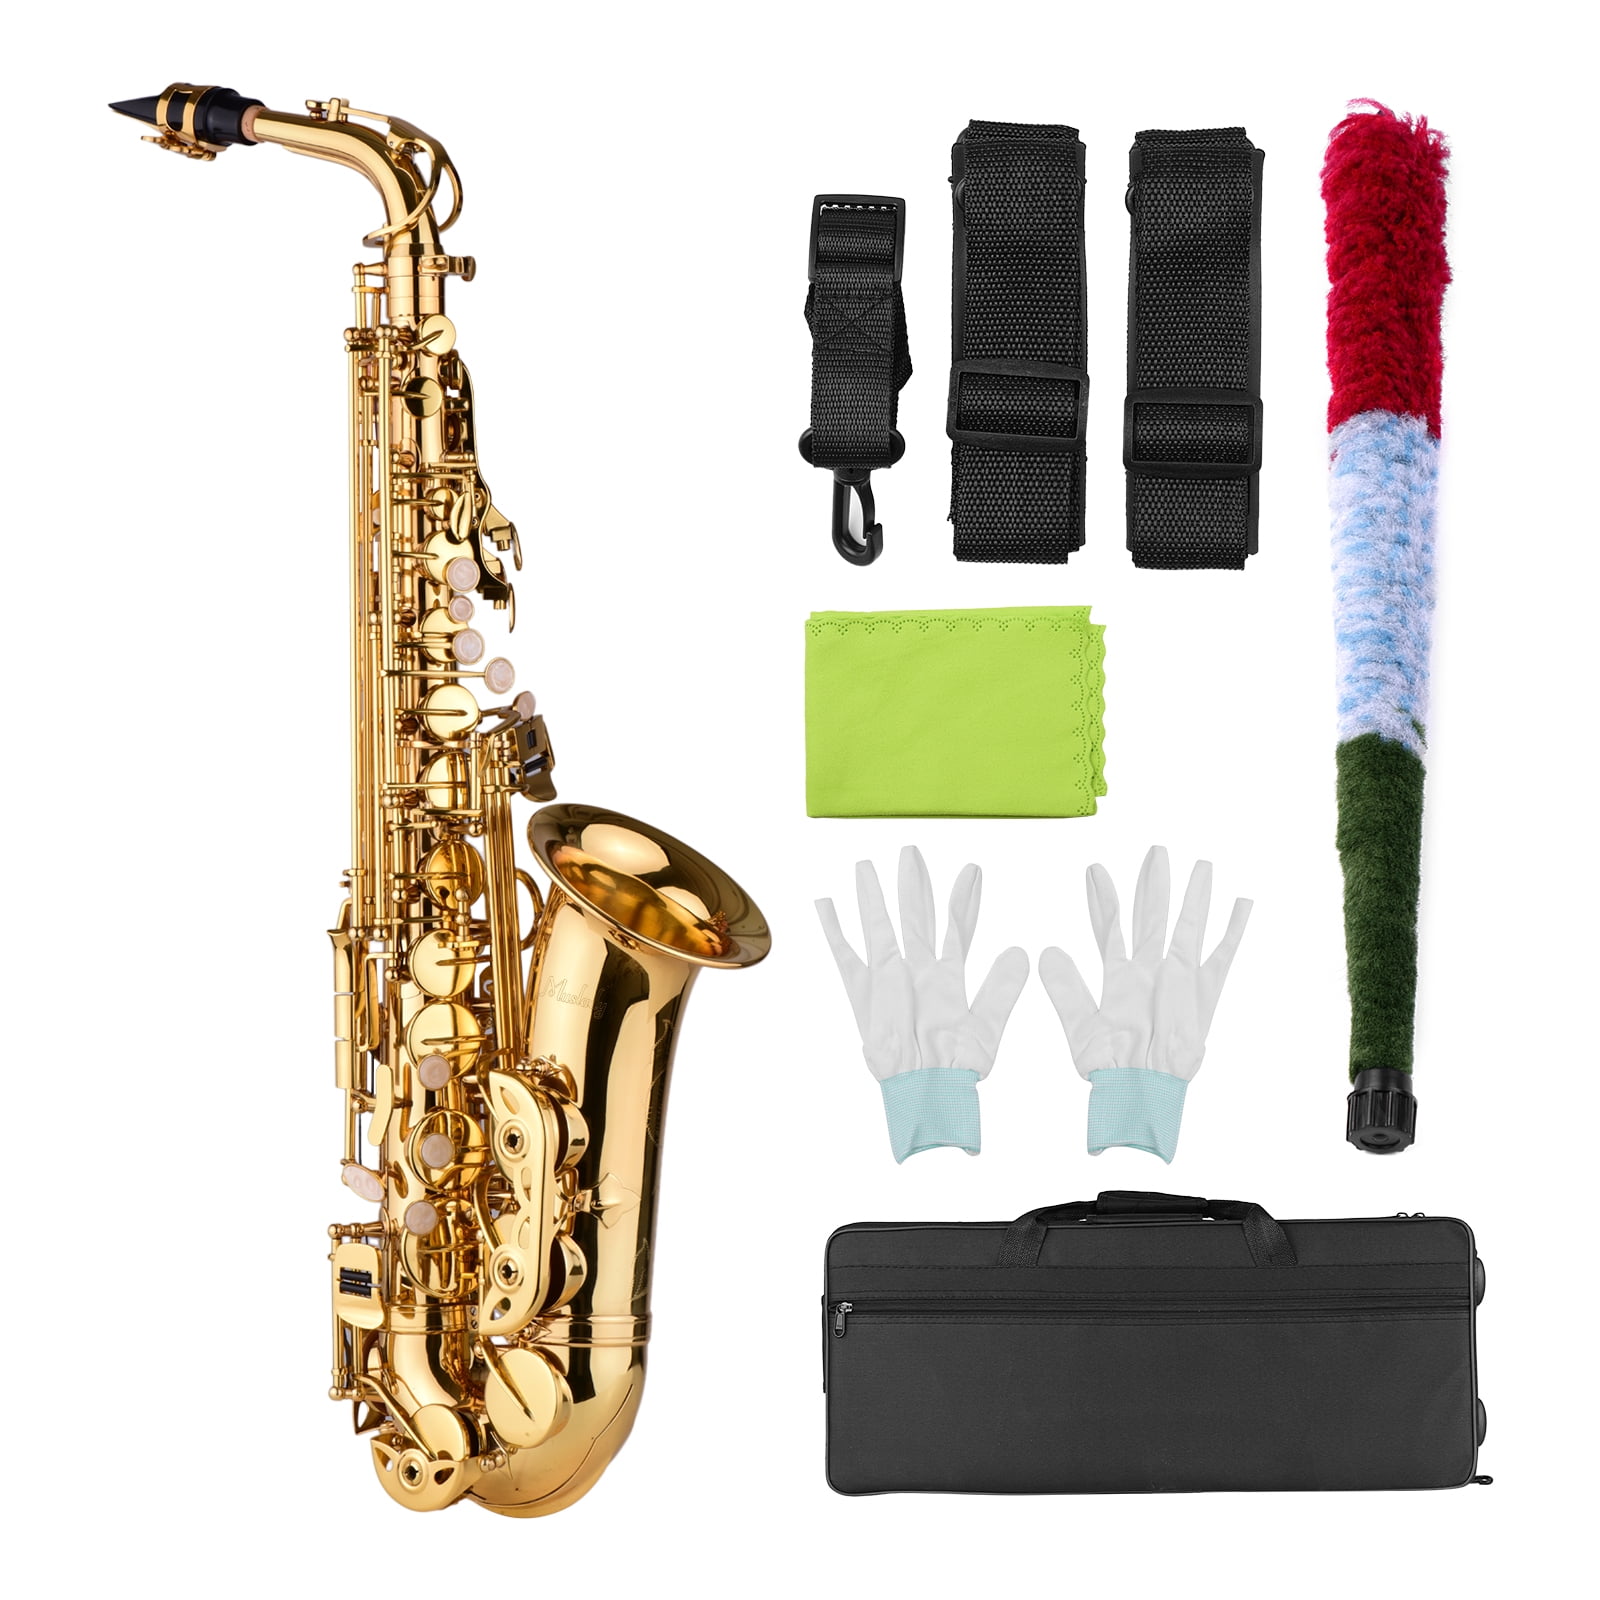 Chiffon de nettoyage pour saxophone, kit de nettoyage pour